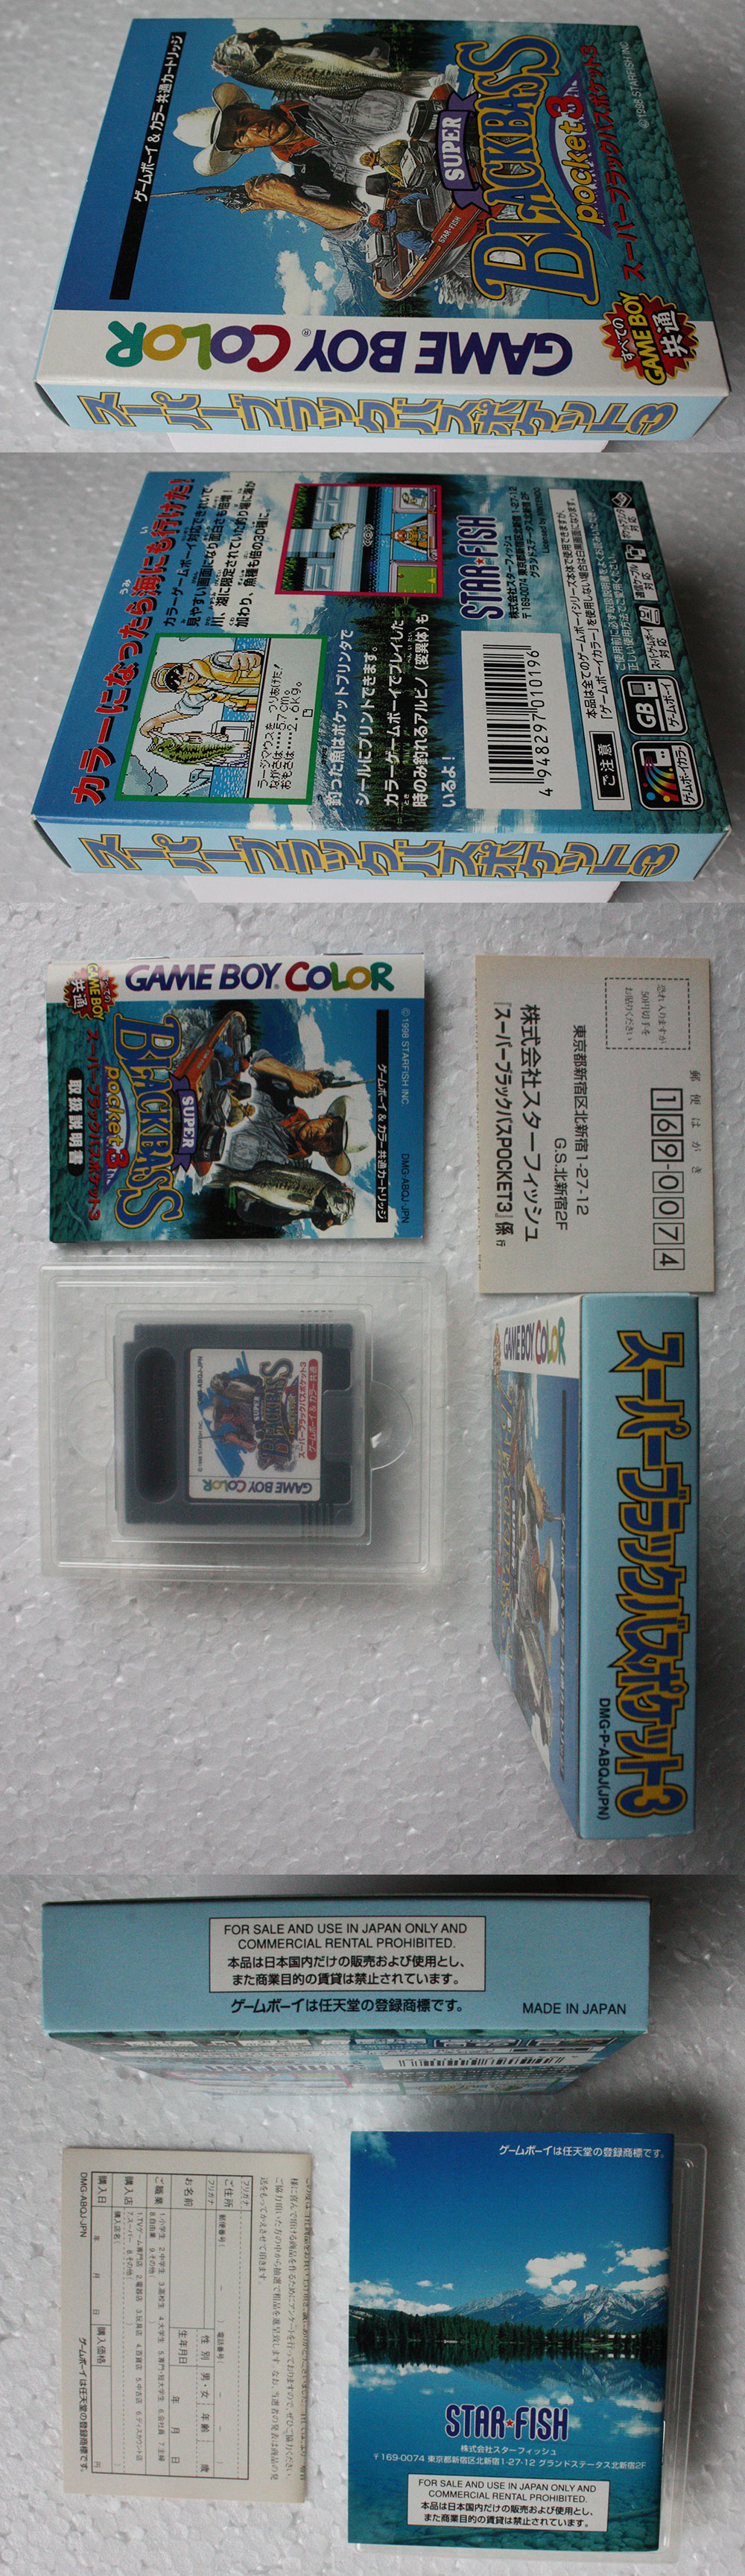 Super Black Bass - Game Boy